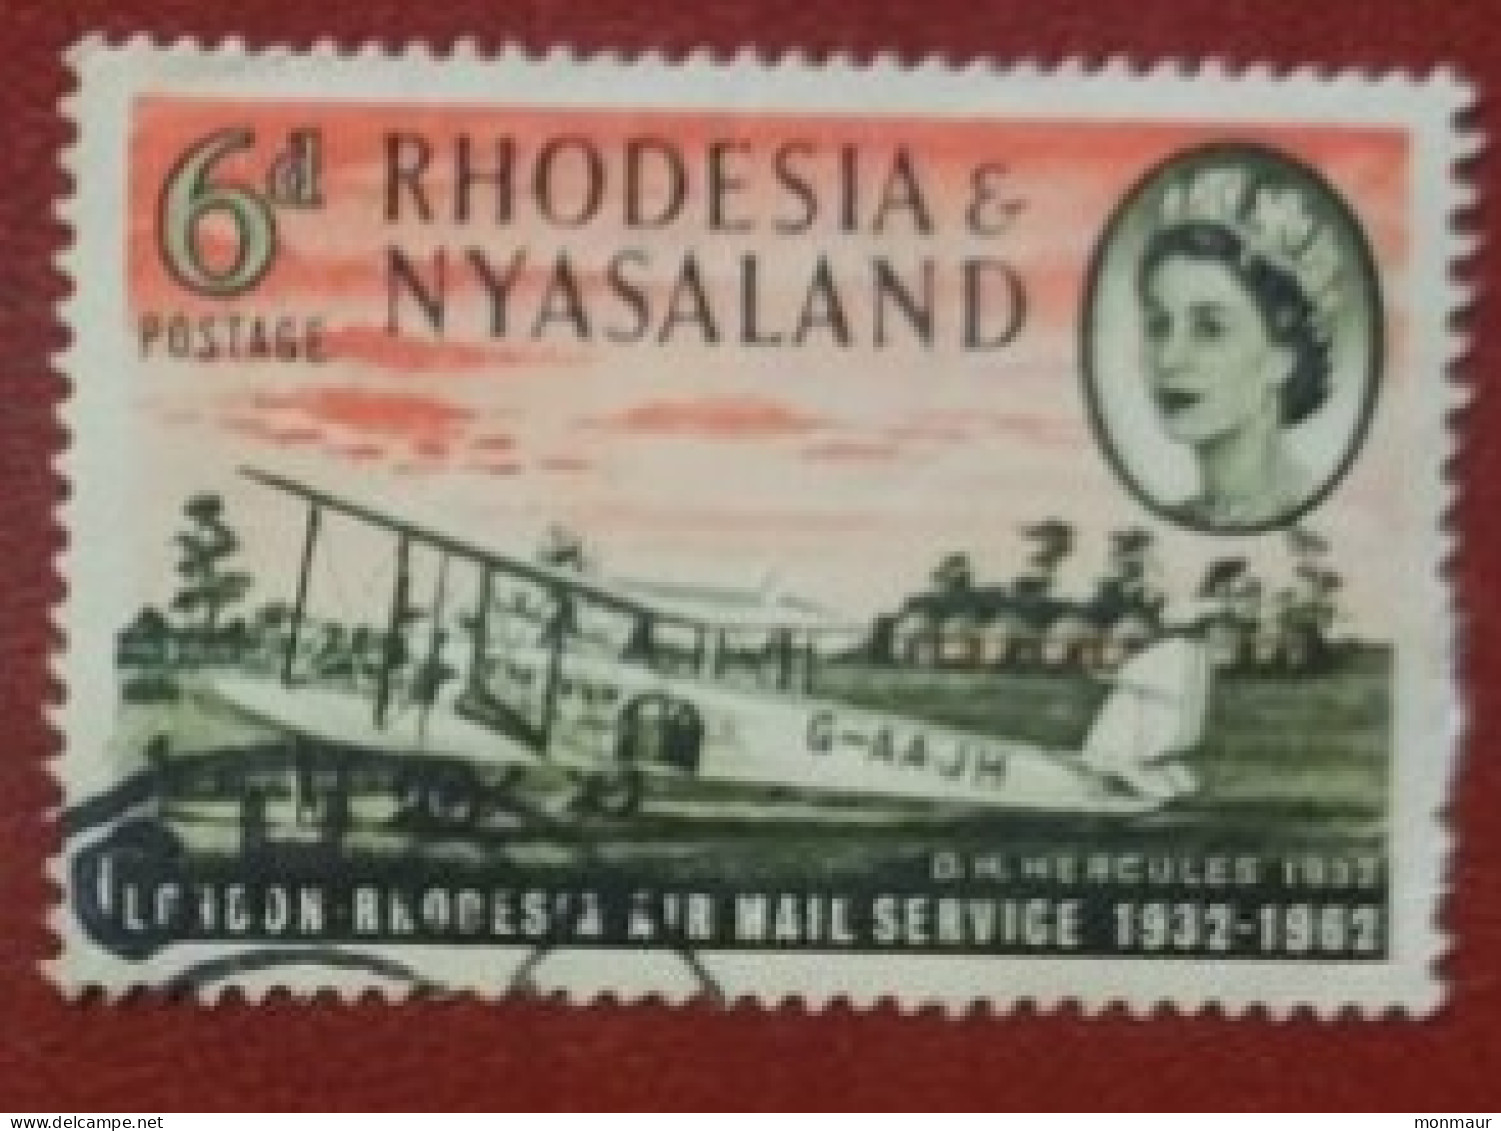 RHODESIA & NYASALAND  1962  LONDONRHODESIA AIR MAIL - Rhodésie & Nyasaland (1954-1963)